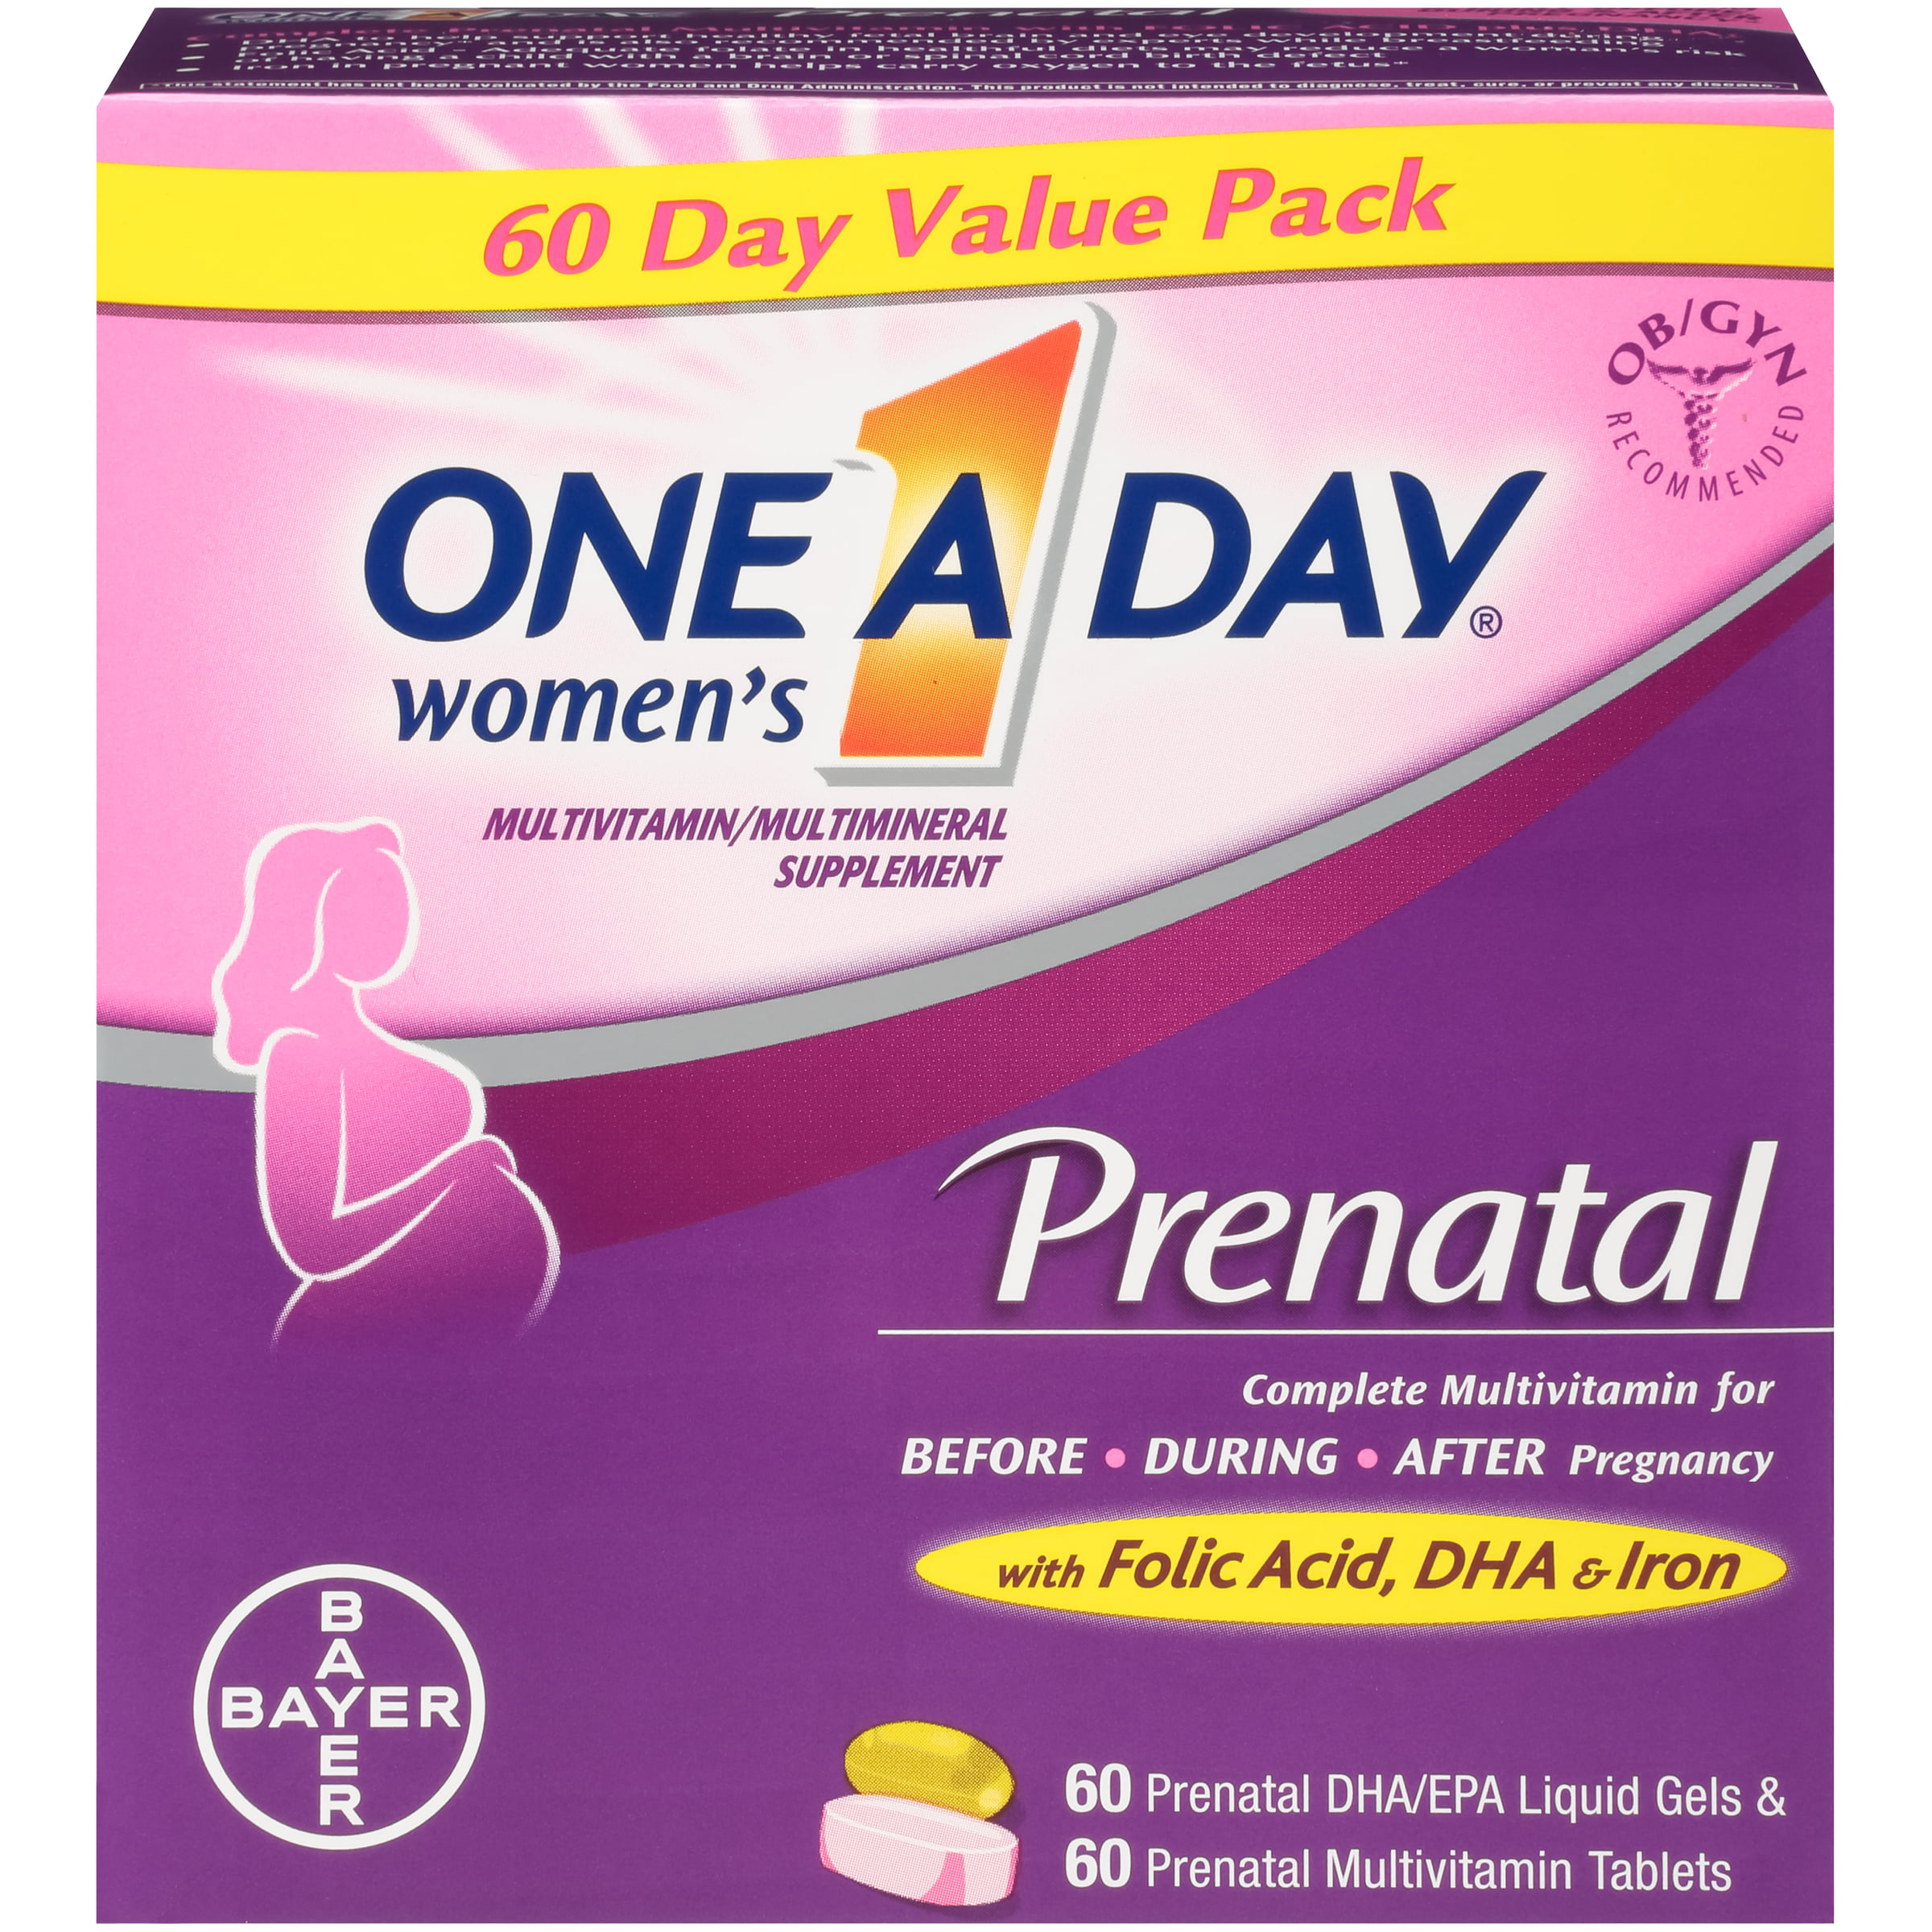 One A Day Women's Prenatal Multivitamin Two Pill Formula, Supplement